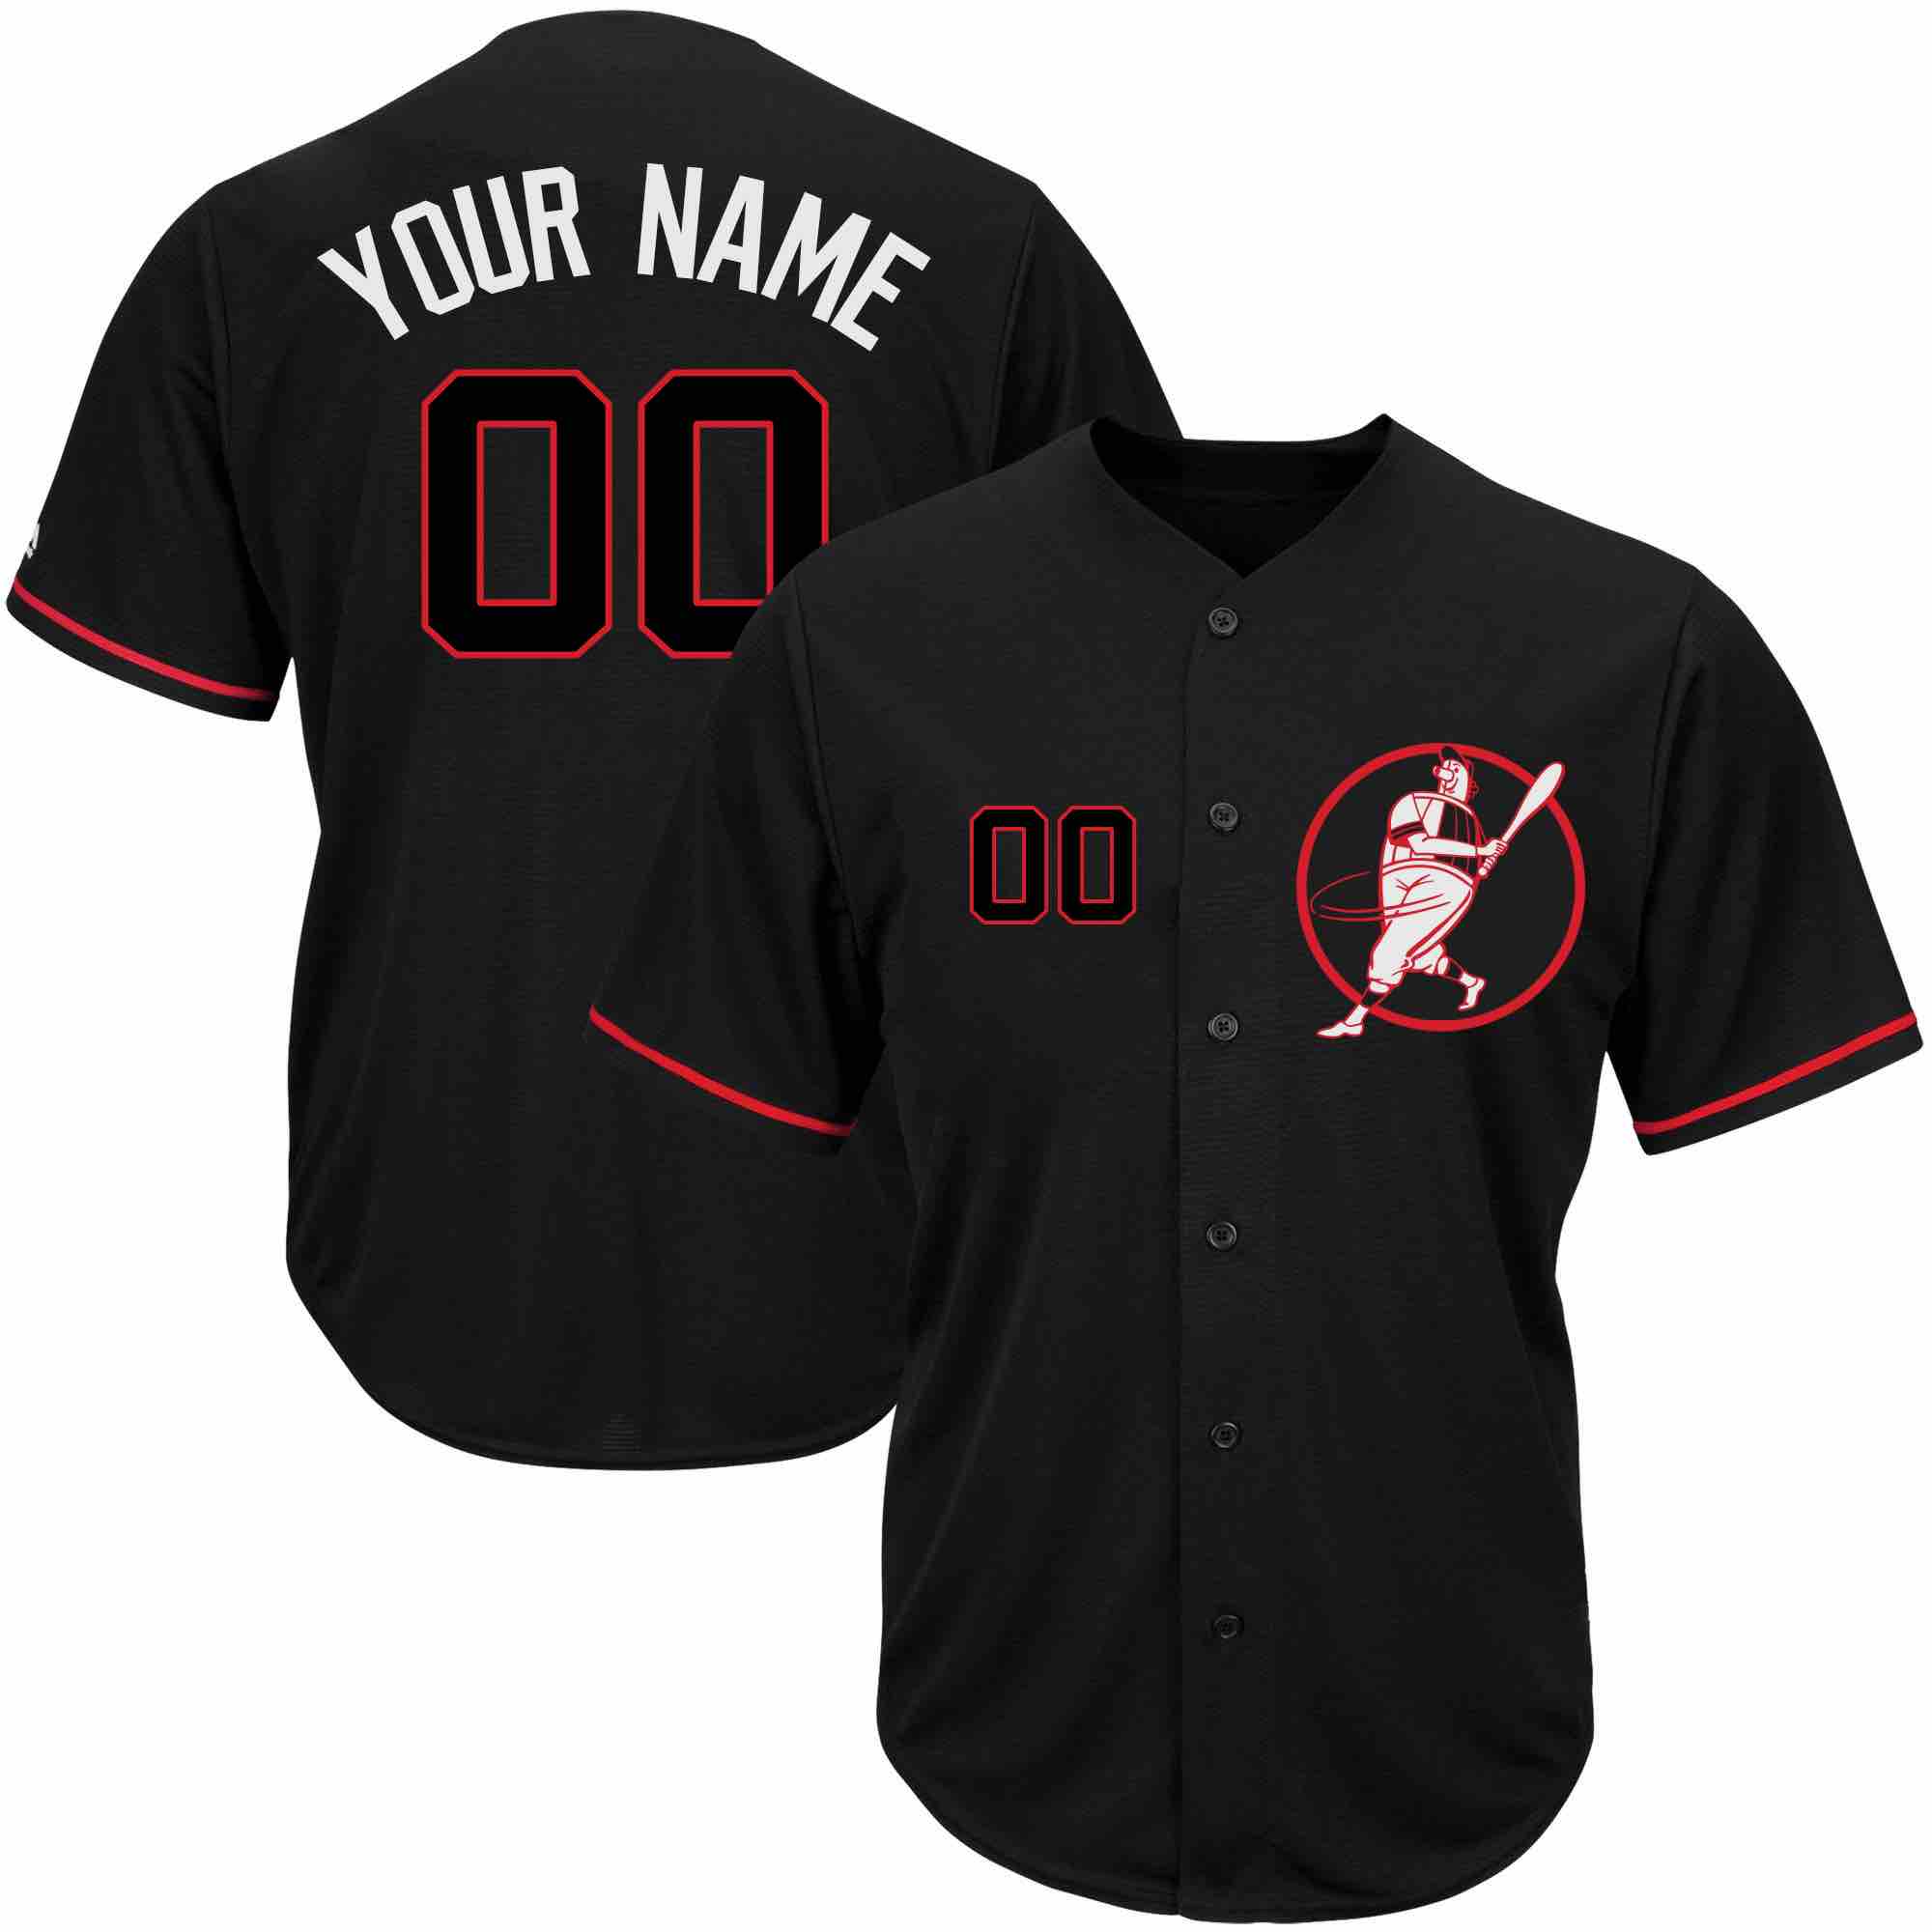 MLB Washington Nationals Personalized Black Color Jersey